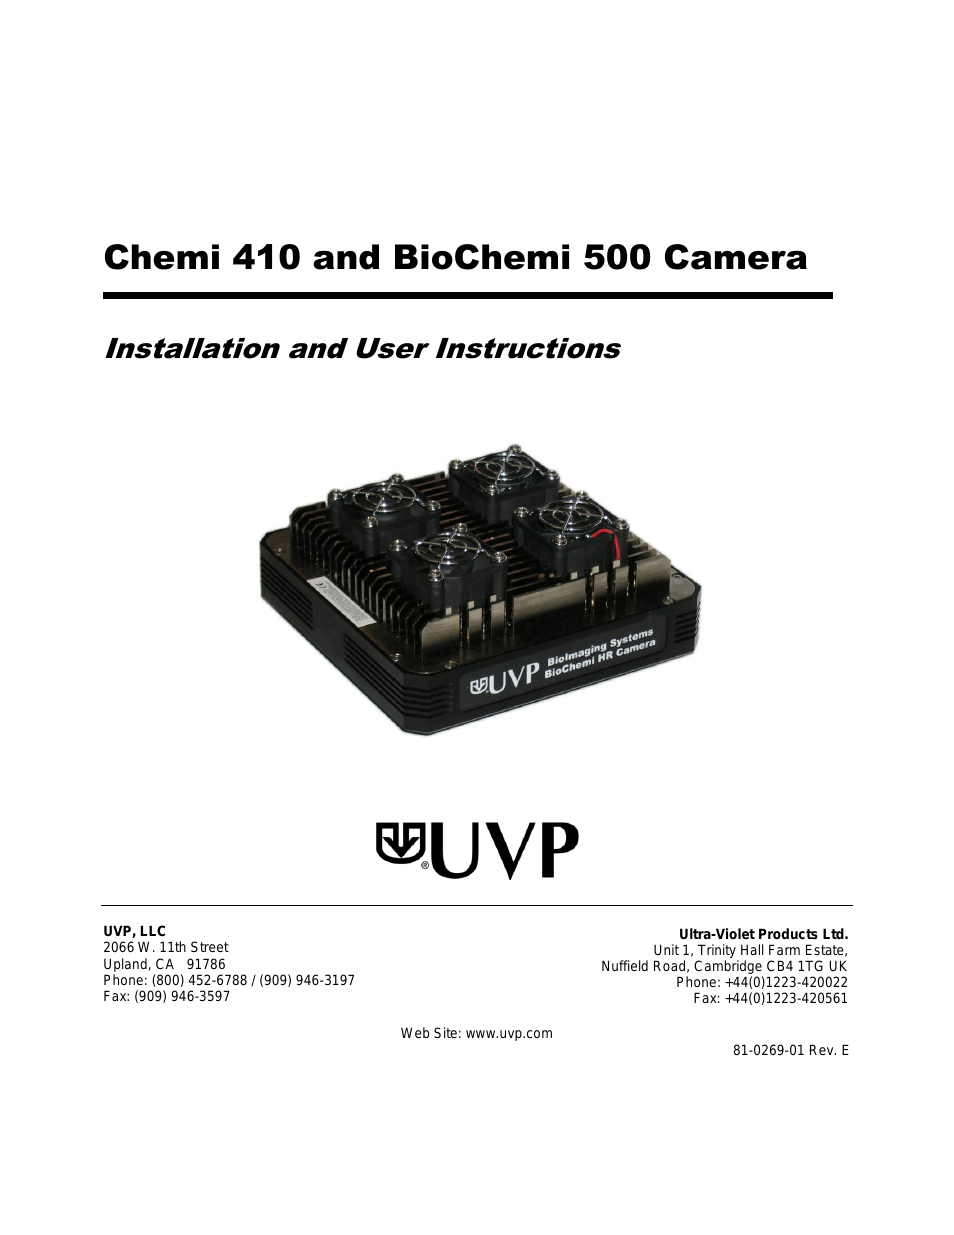 BioChemi 500 Camera